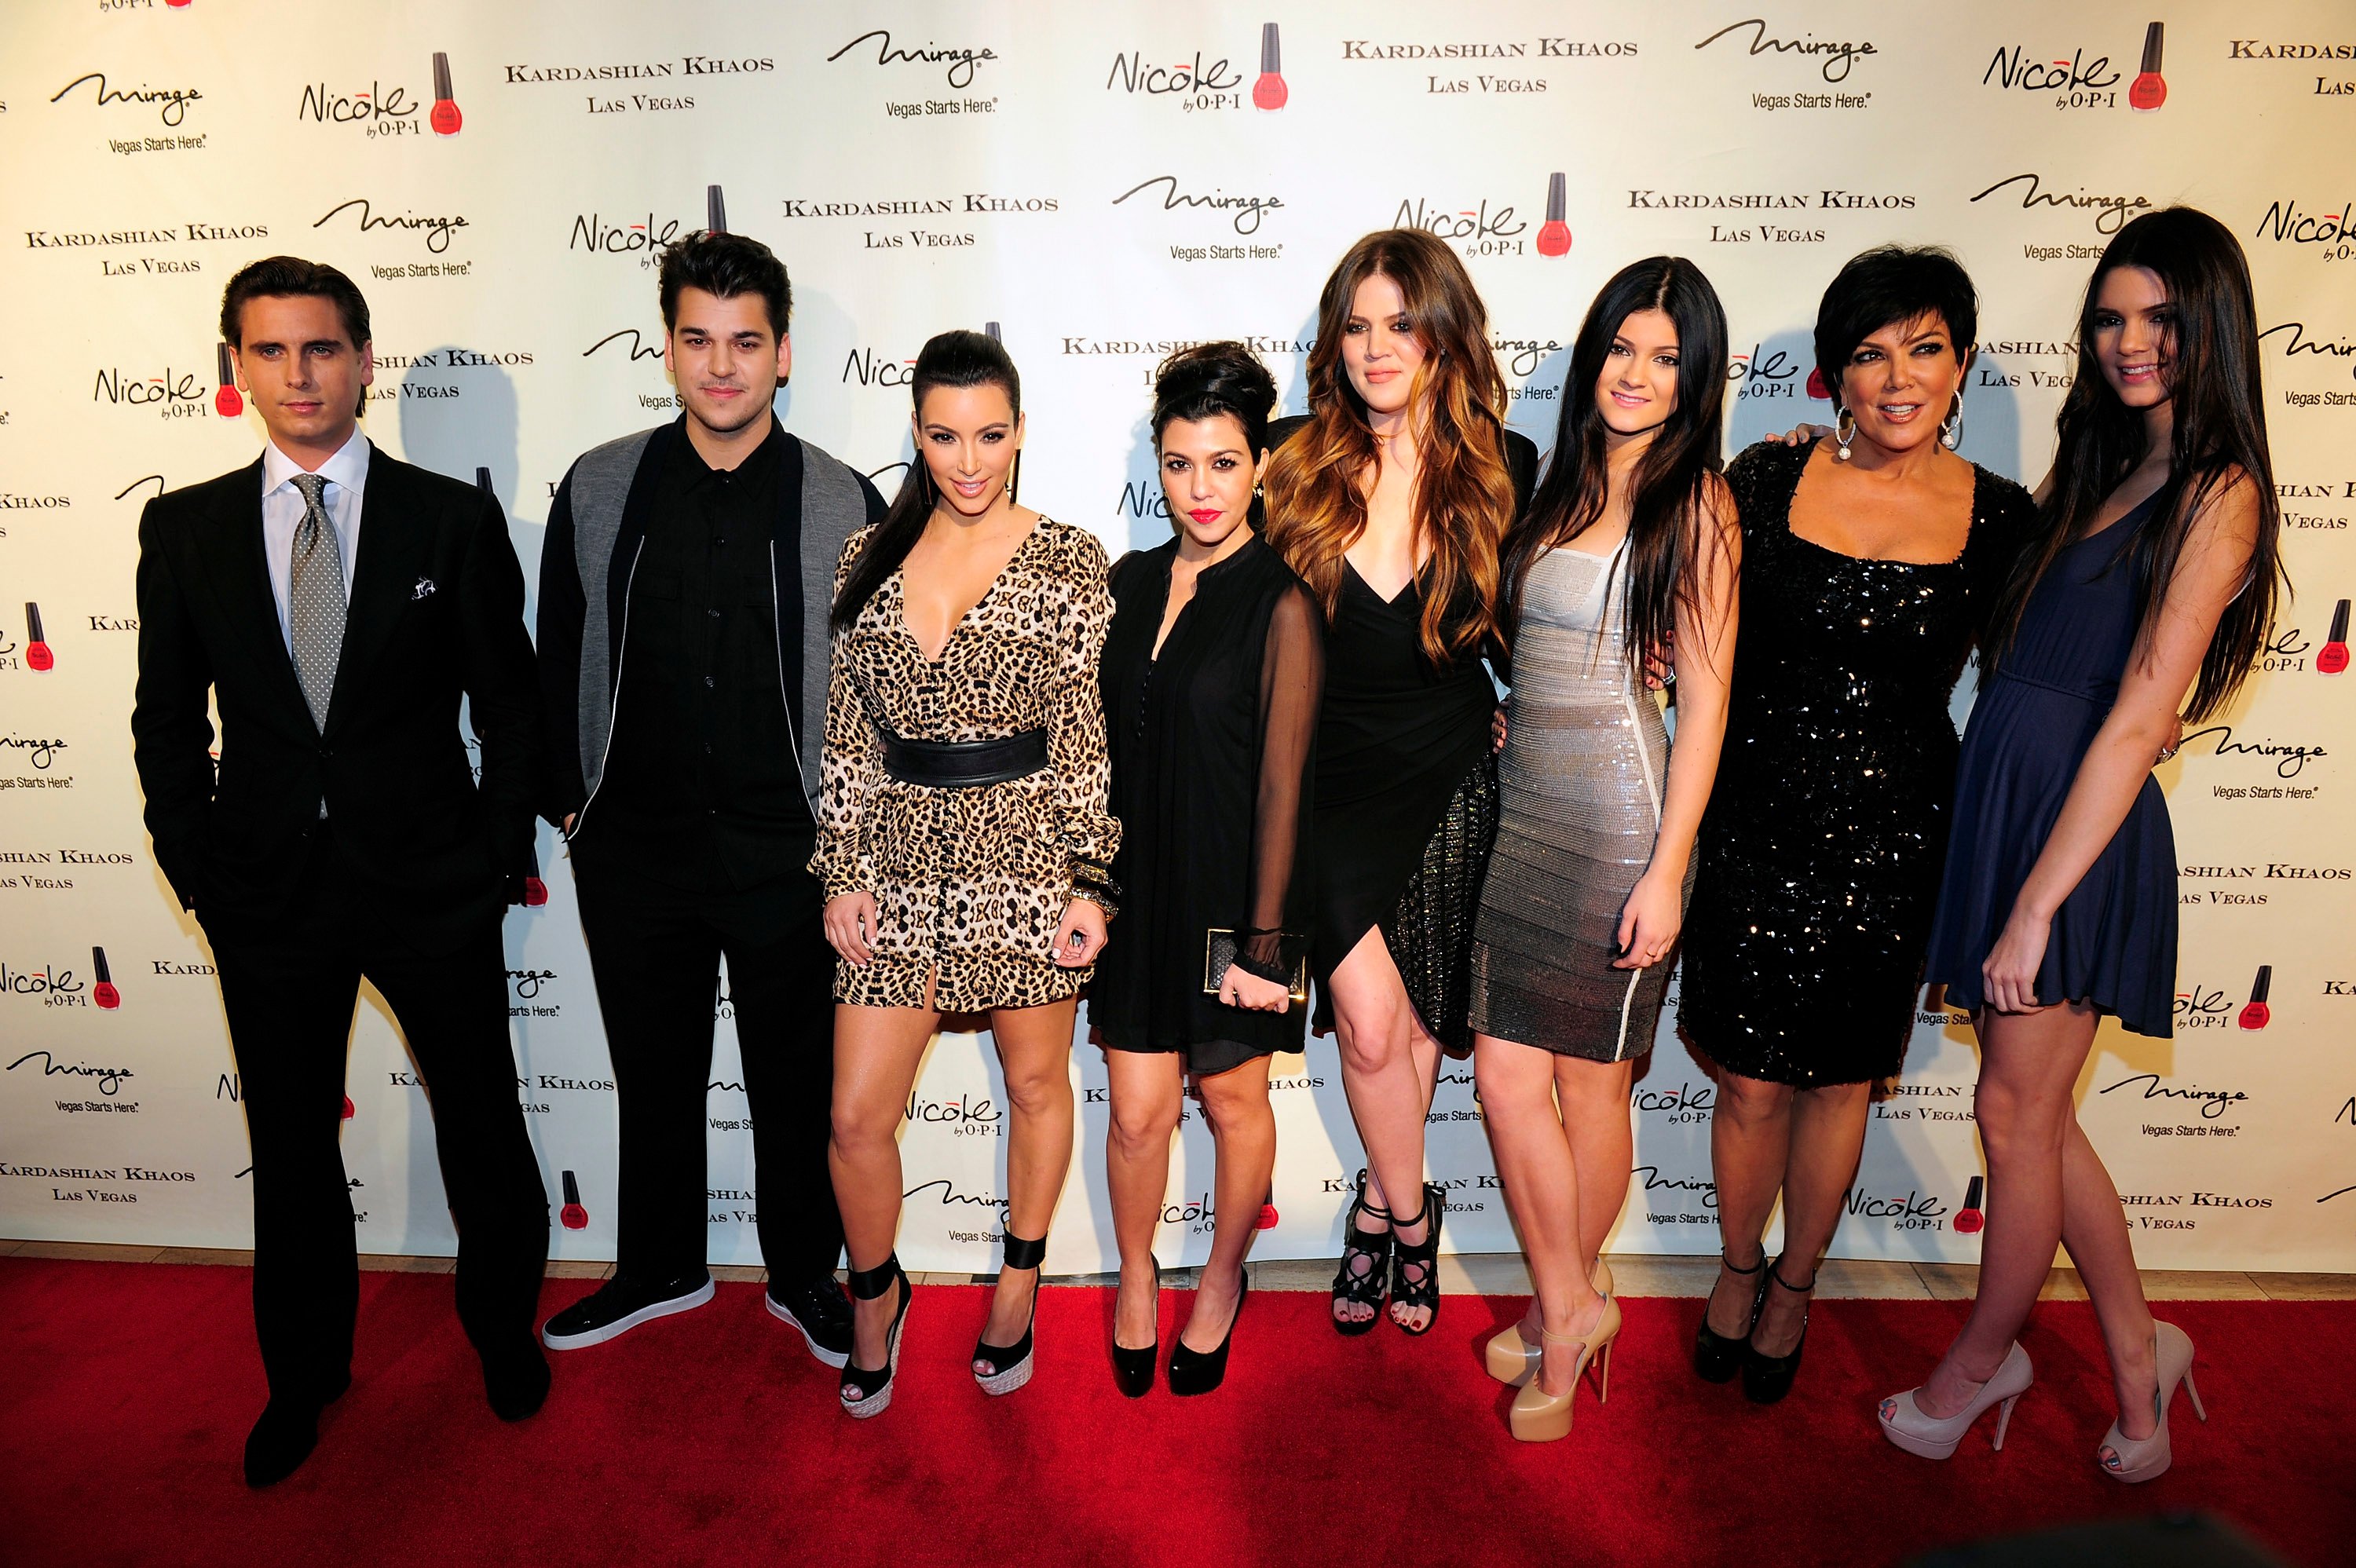 Scott Disick, Rob Kardashian, Kim Kardashian West, Kourtney Kardashian, Khloé Kardashian, Kylie Jenner, Kris Jenner, and Kendall Jenner 